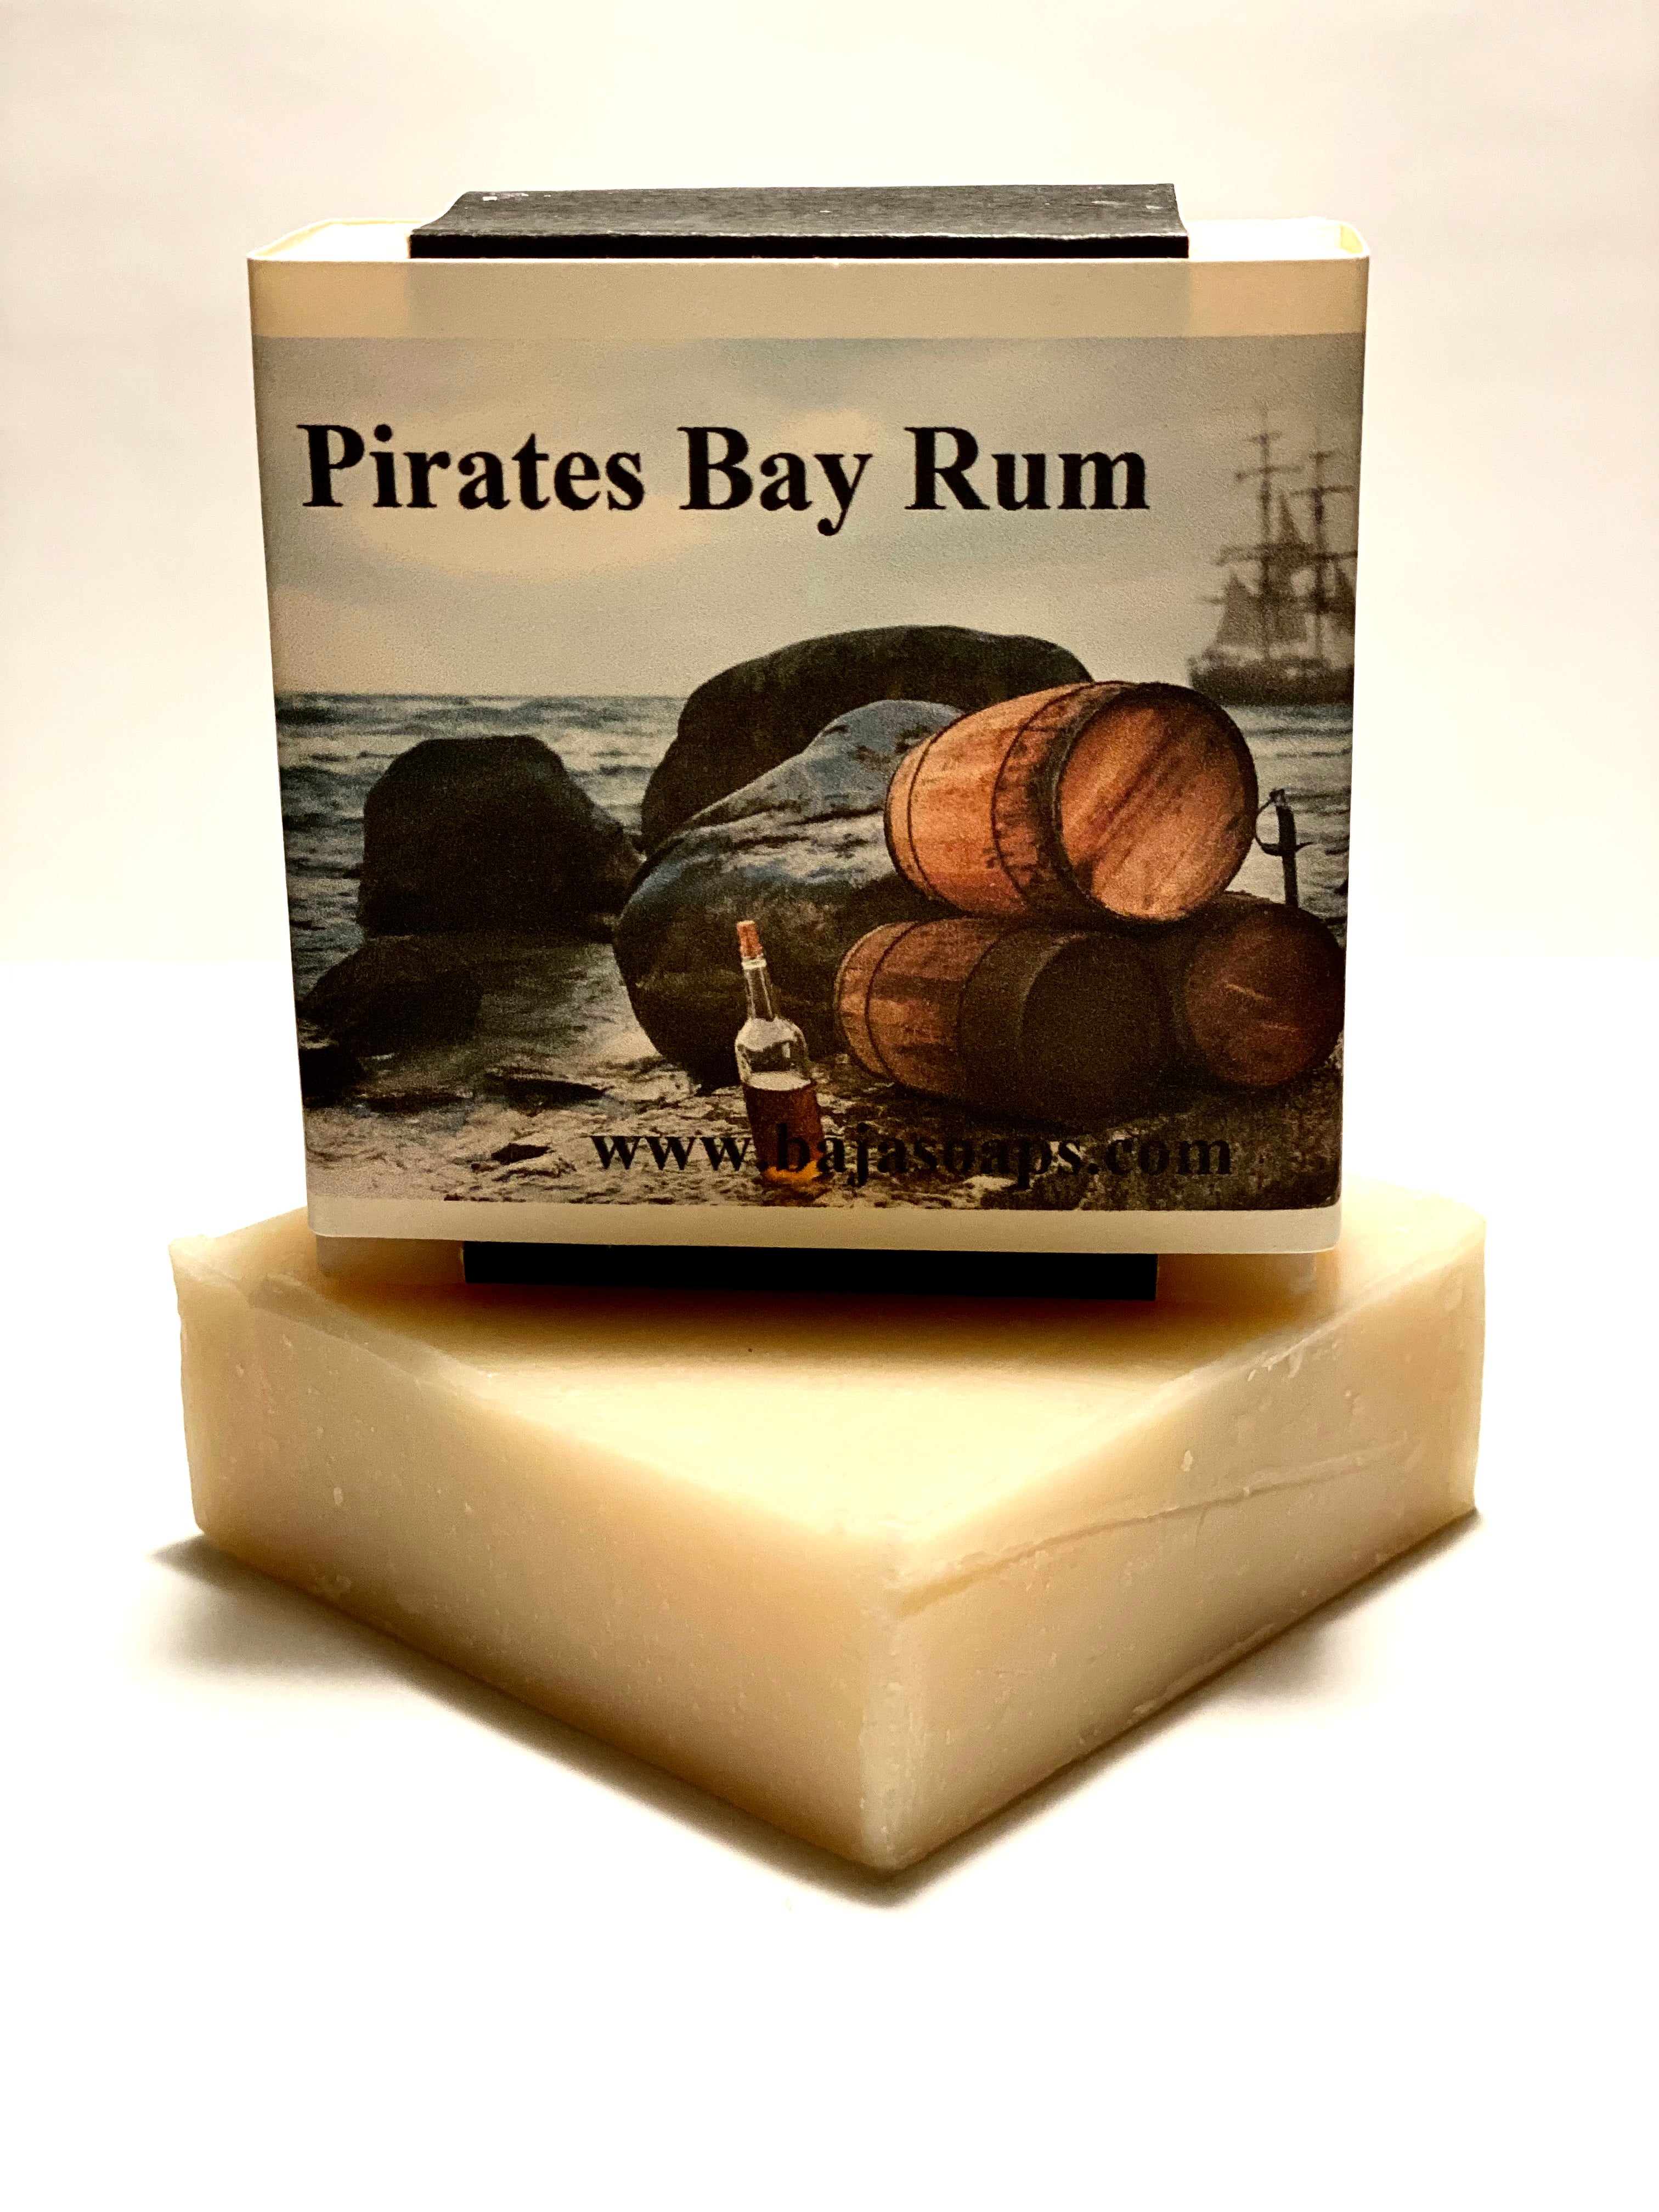 Dr. Squatch Natural Bar Soap, Bay Rum, 5 oz 